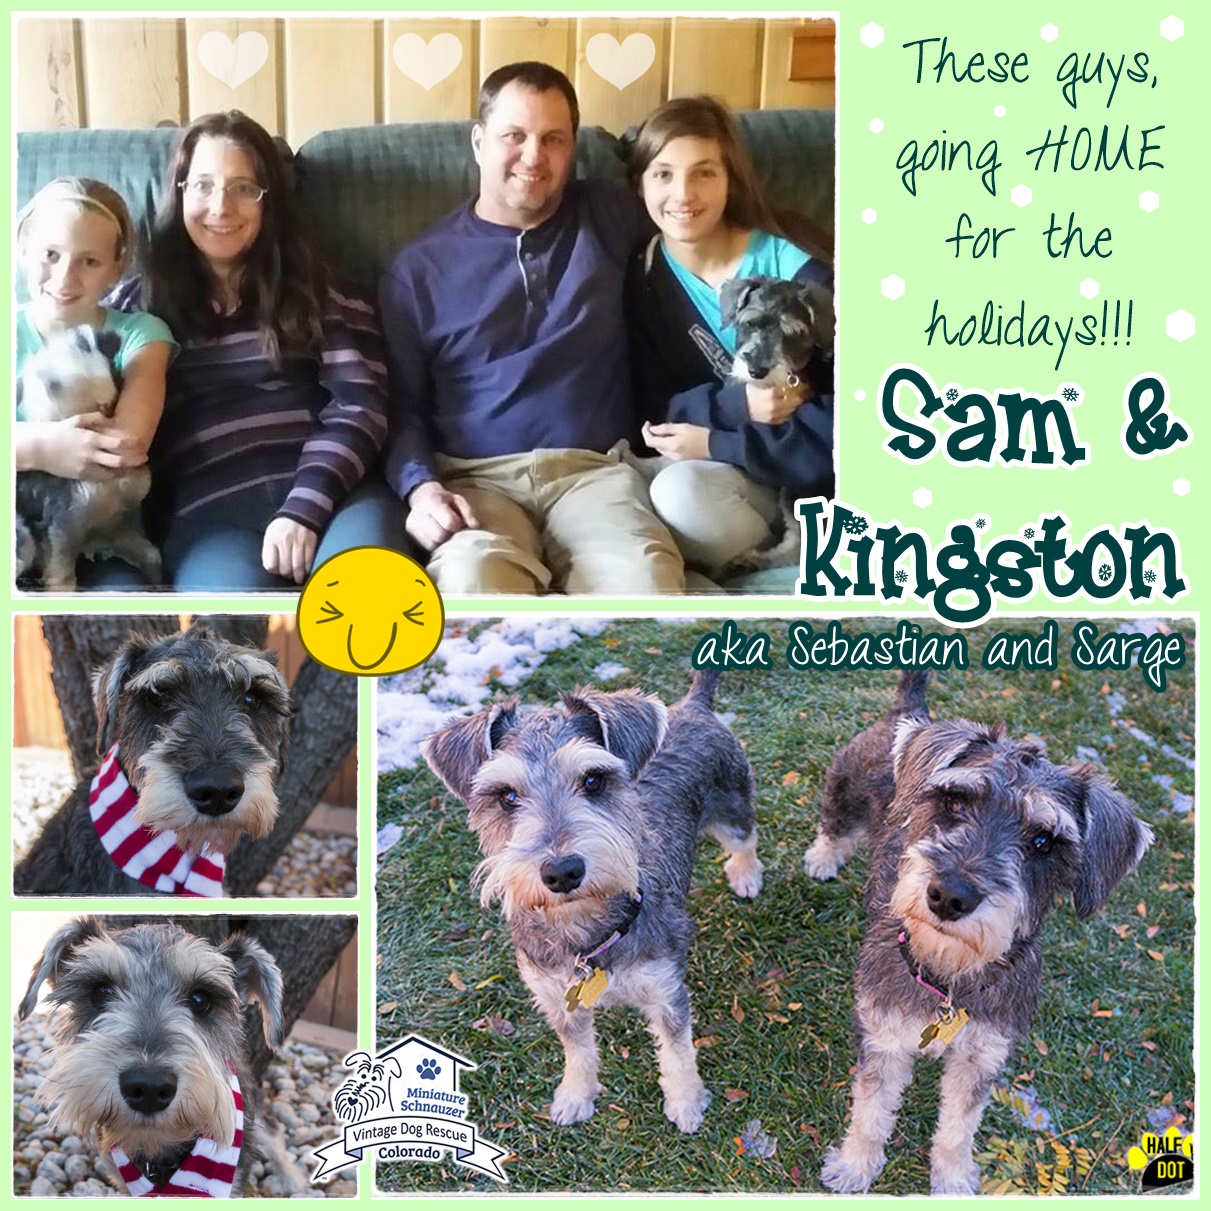 Sam & Kingston (Mini Schnauzers) adopted